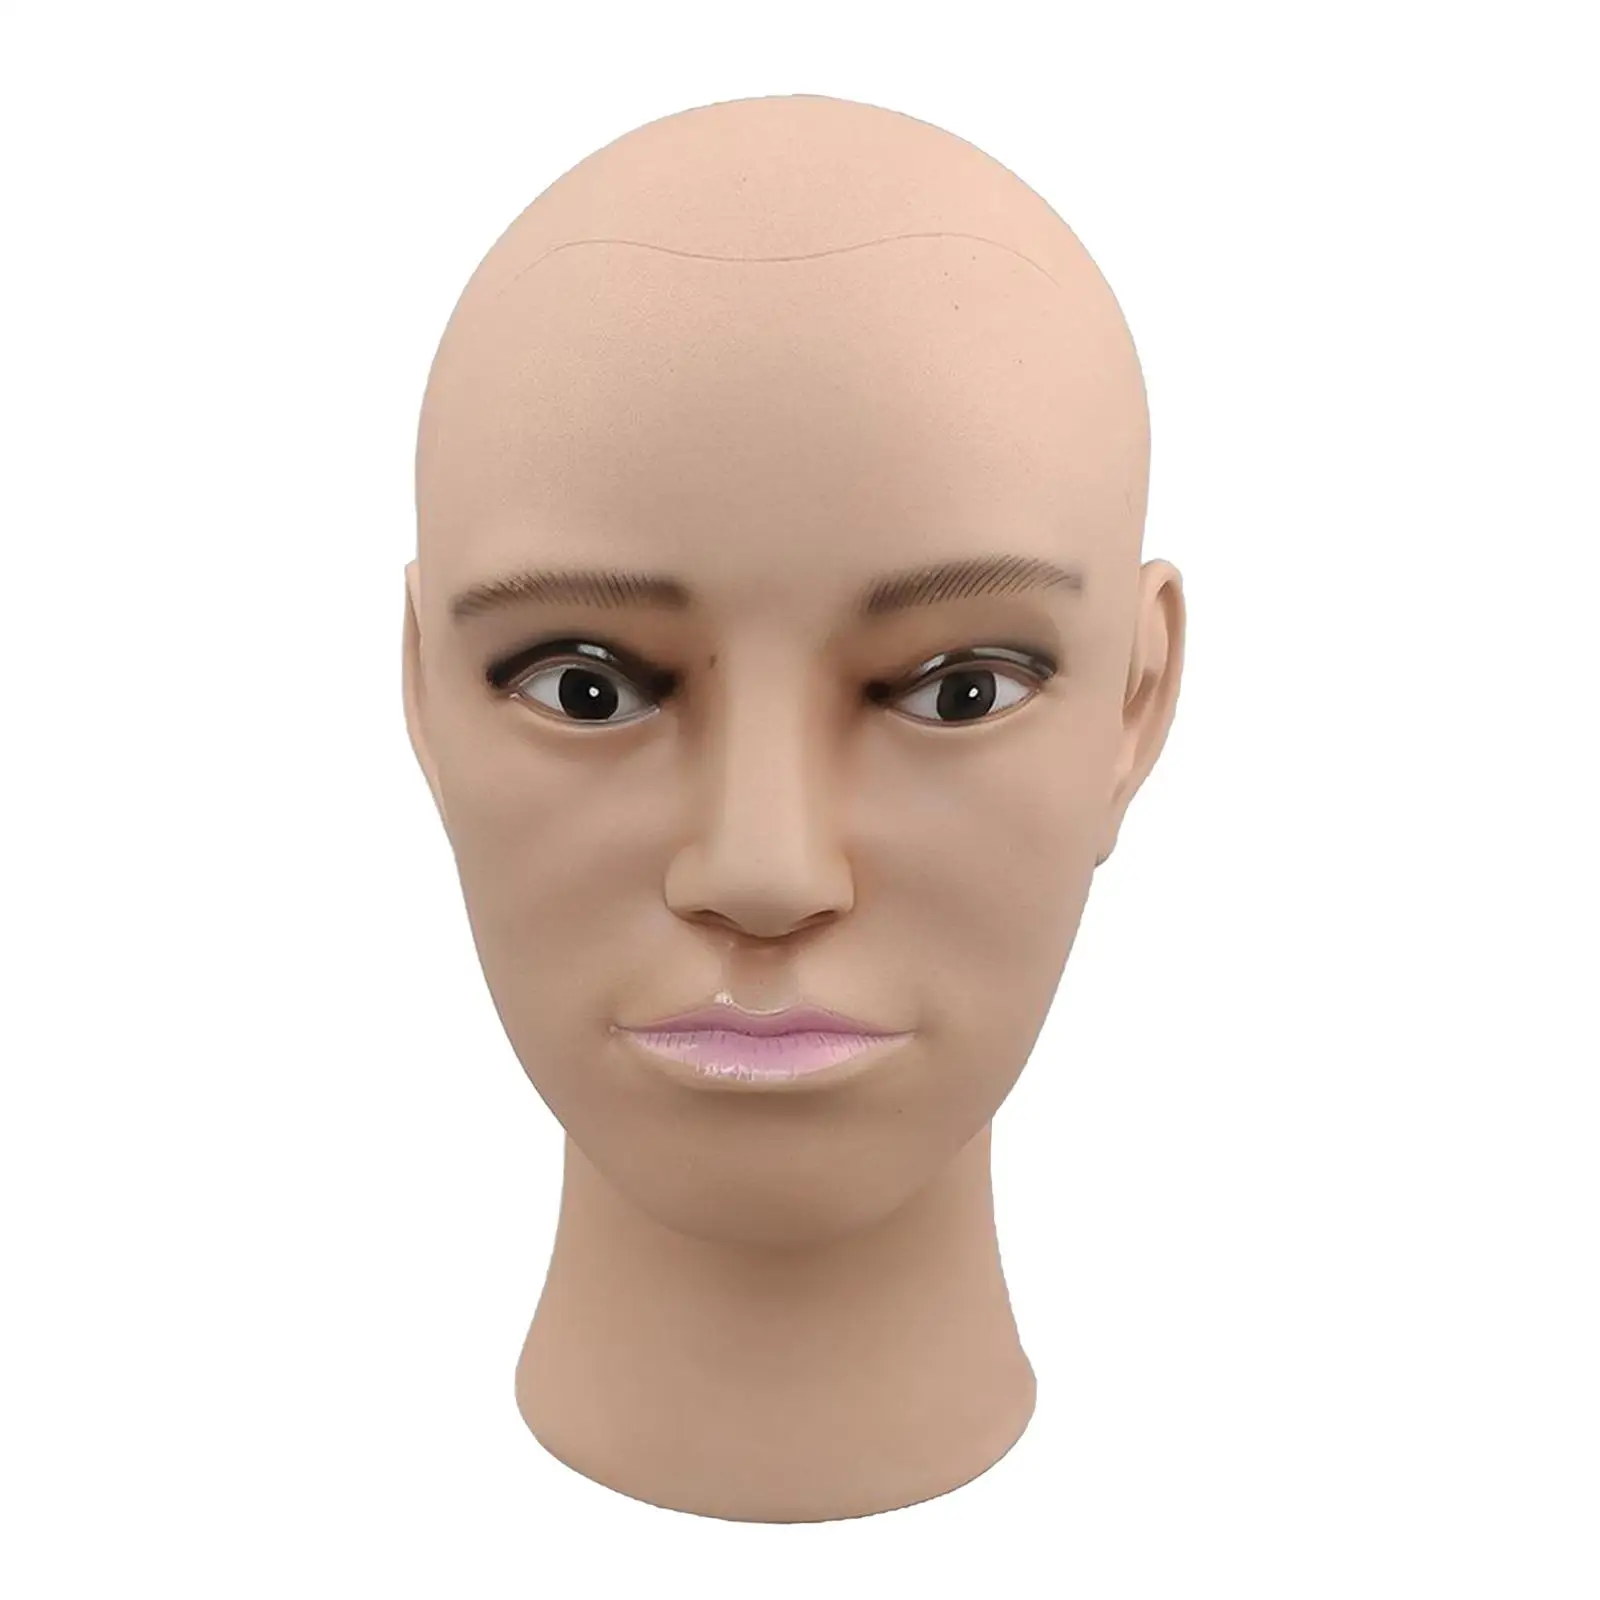 Bald Male  Head Cosmetology Manikin Model Doll Head for Making,Displays,eyeglasses  